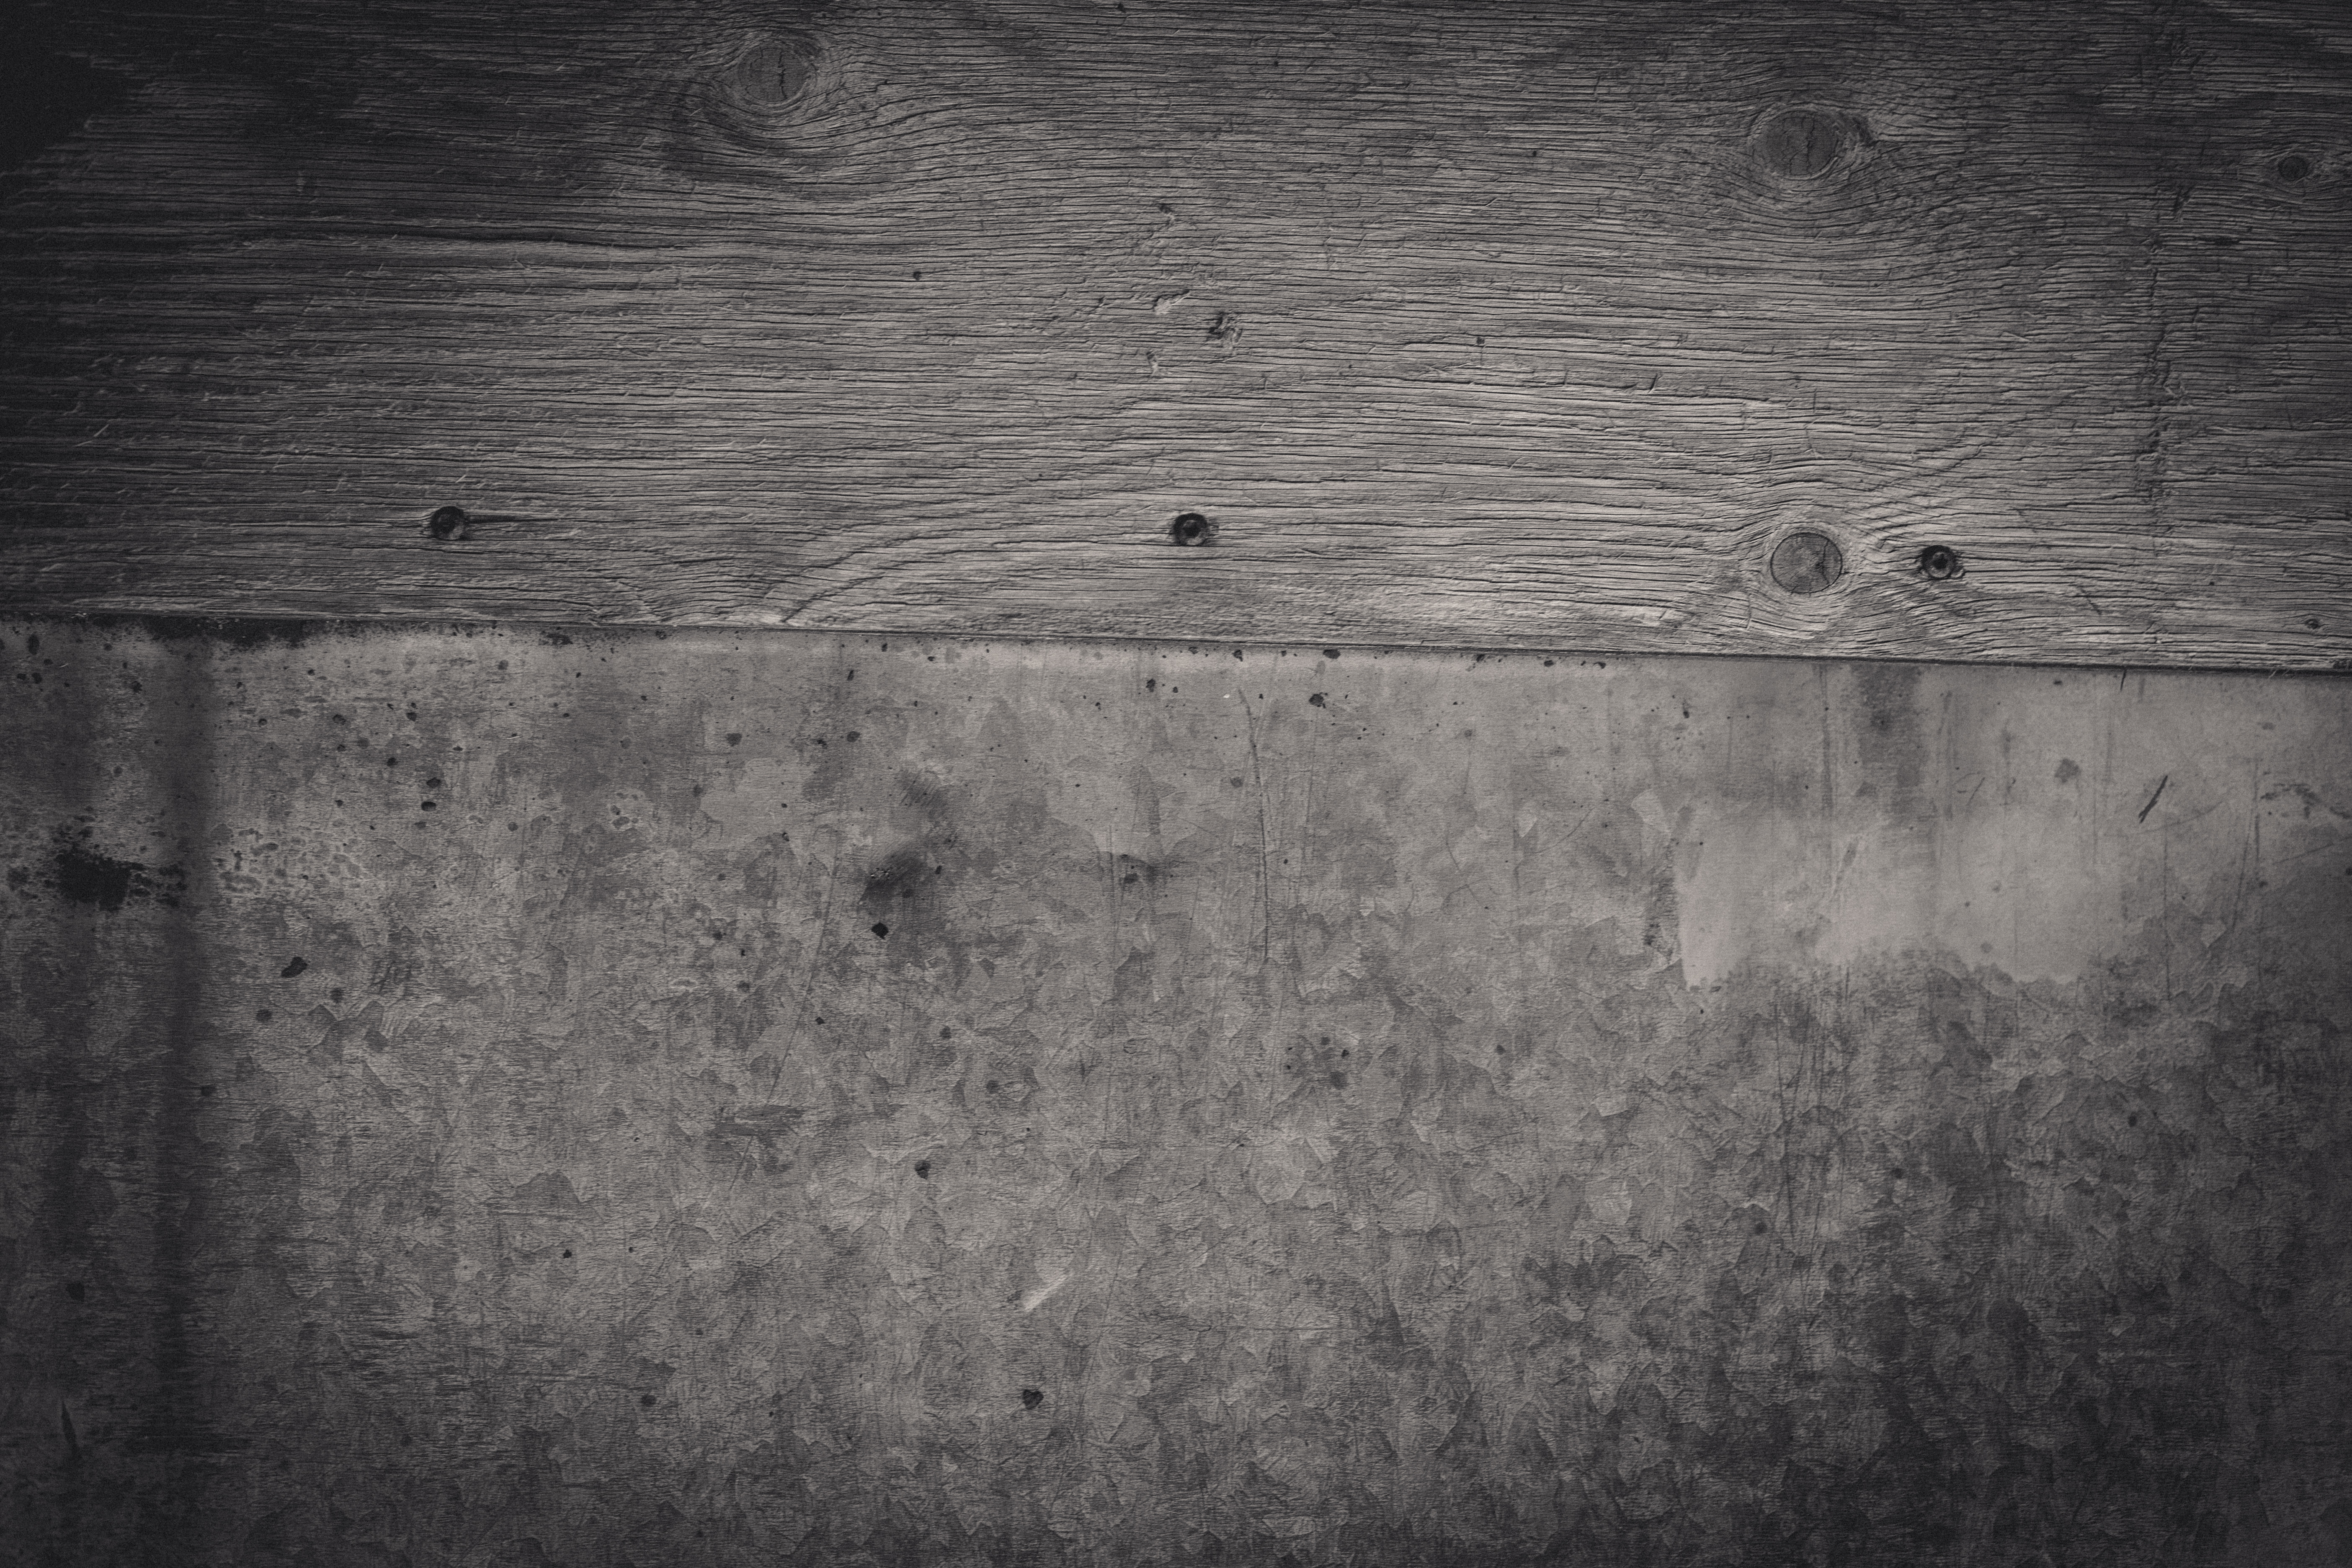 Black & white wood and metal texture photo